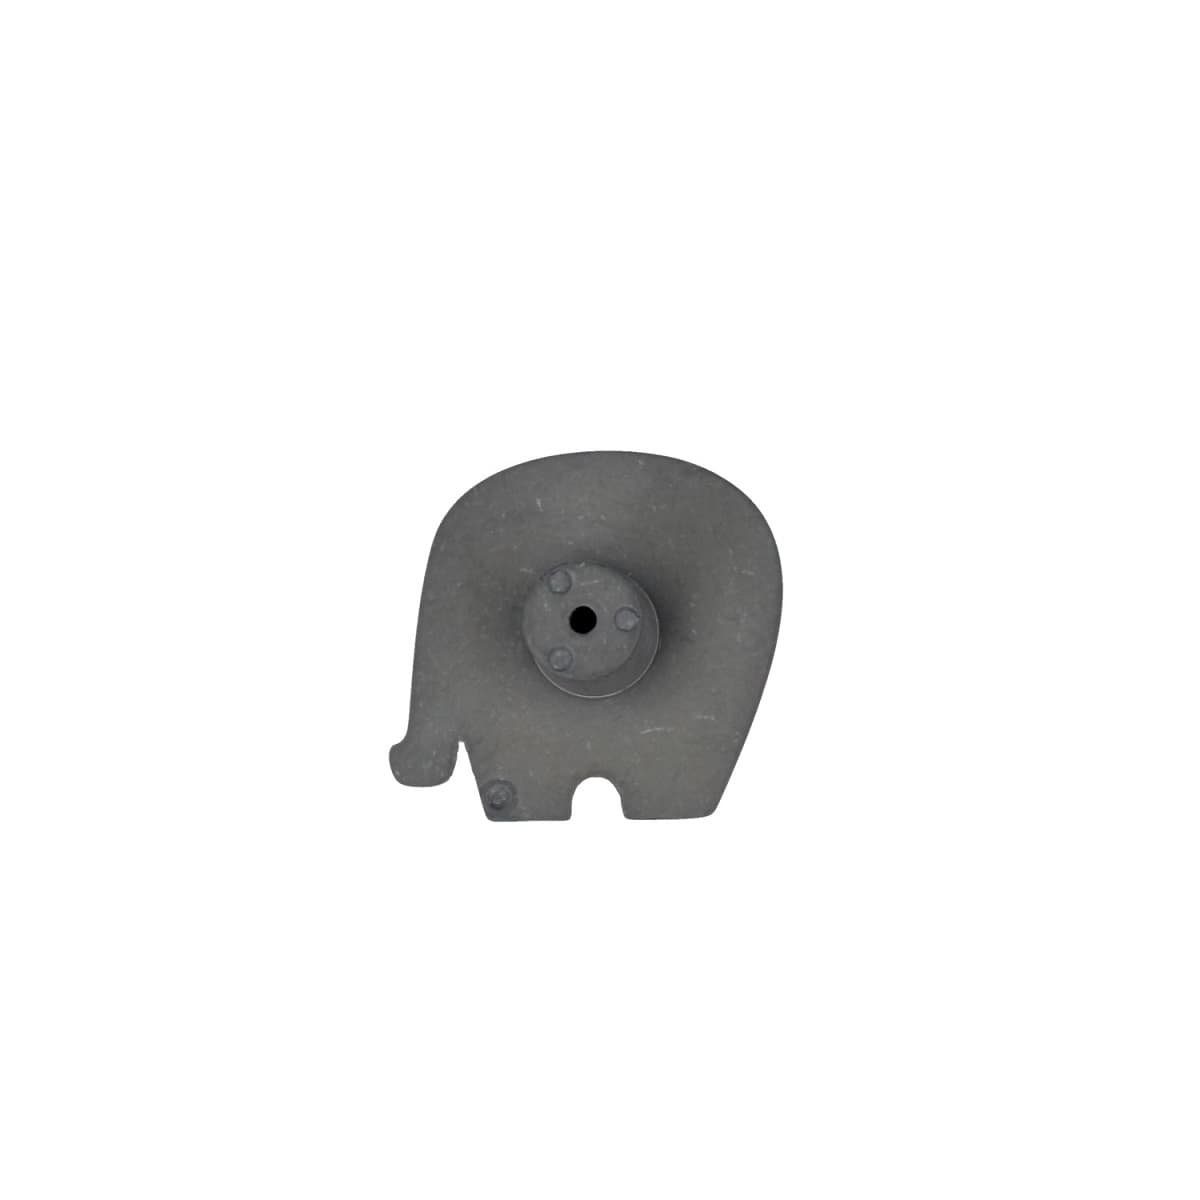 Beschläge Elefant Türbeschlag Kinderzimmerknopf Möbelknopf Modell MS